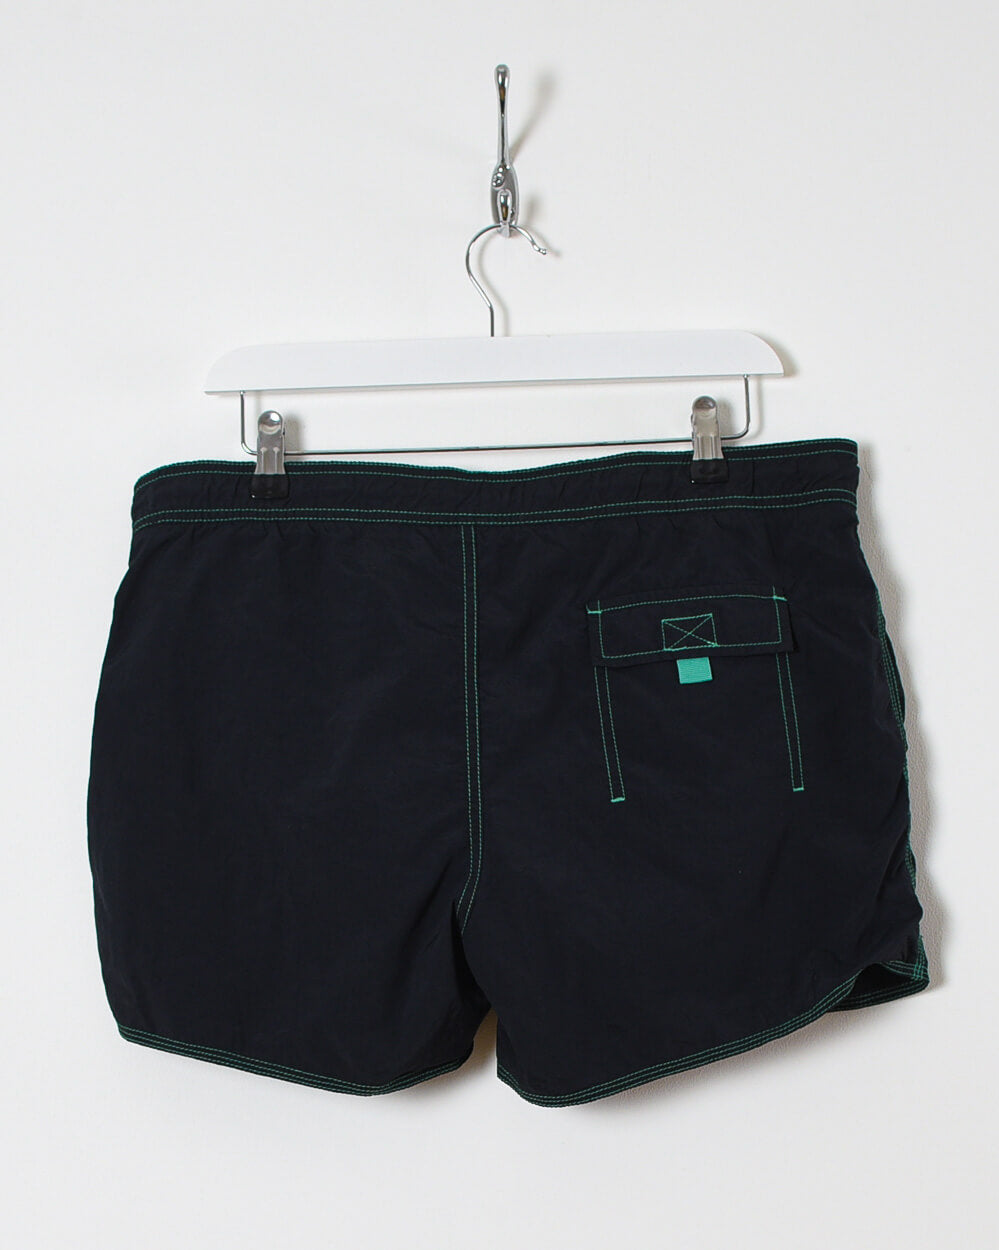 Hugo Boss Swimwear Shorts - W34 - Domno Vintage 90s, 80s, 00s Retro and Vintage Clothing 